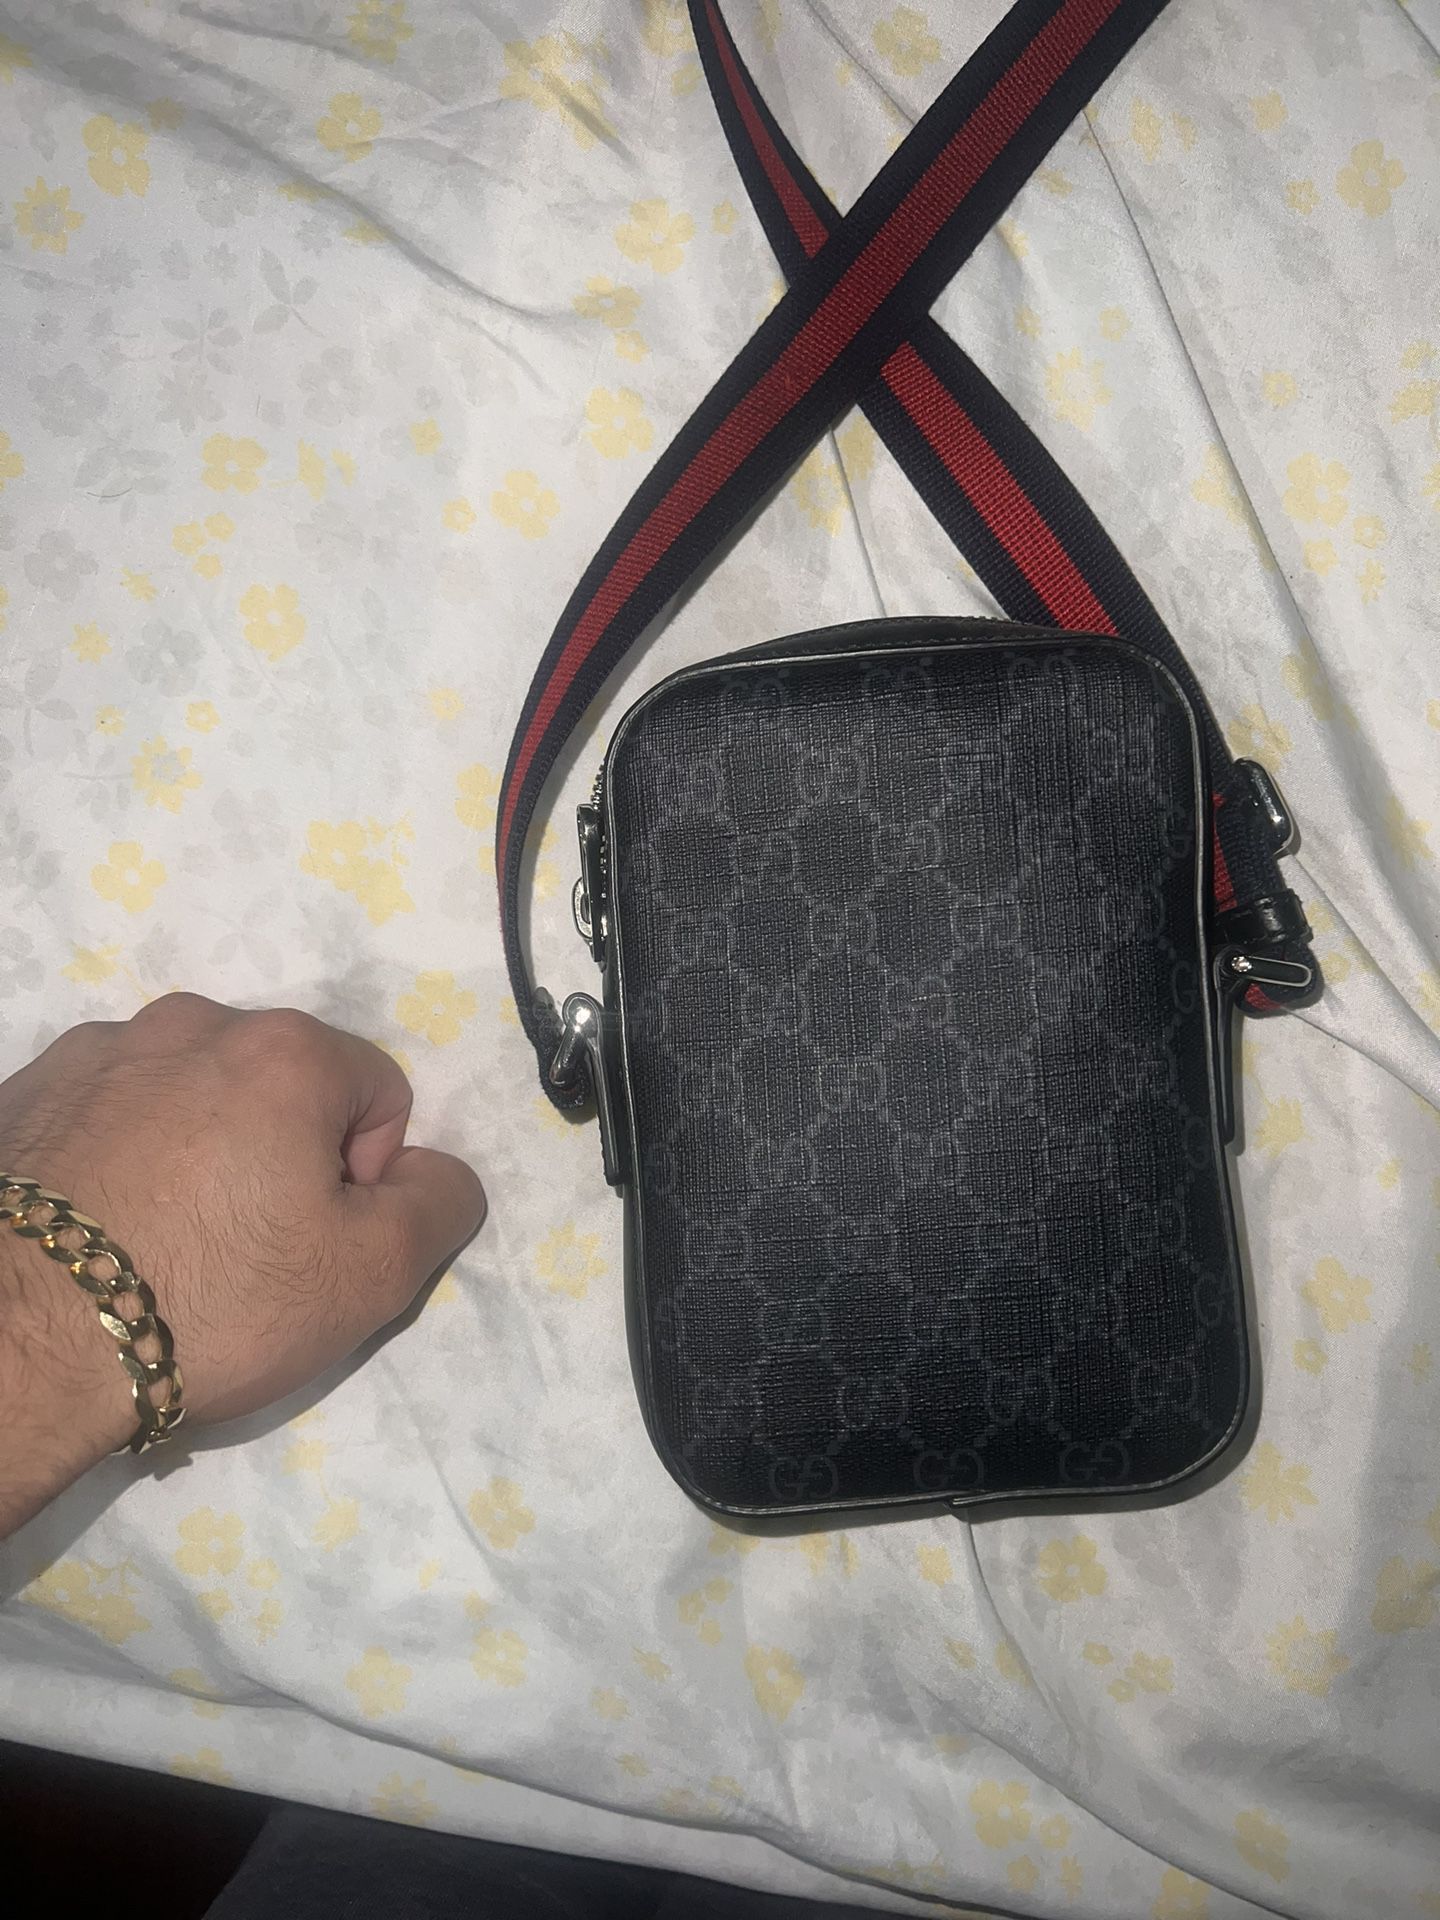 Gucci Interlocking G Shoulder Bag for Sale in Fontana, CA - OfferUp